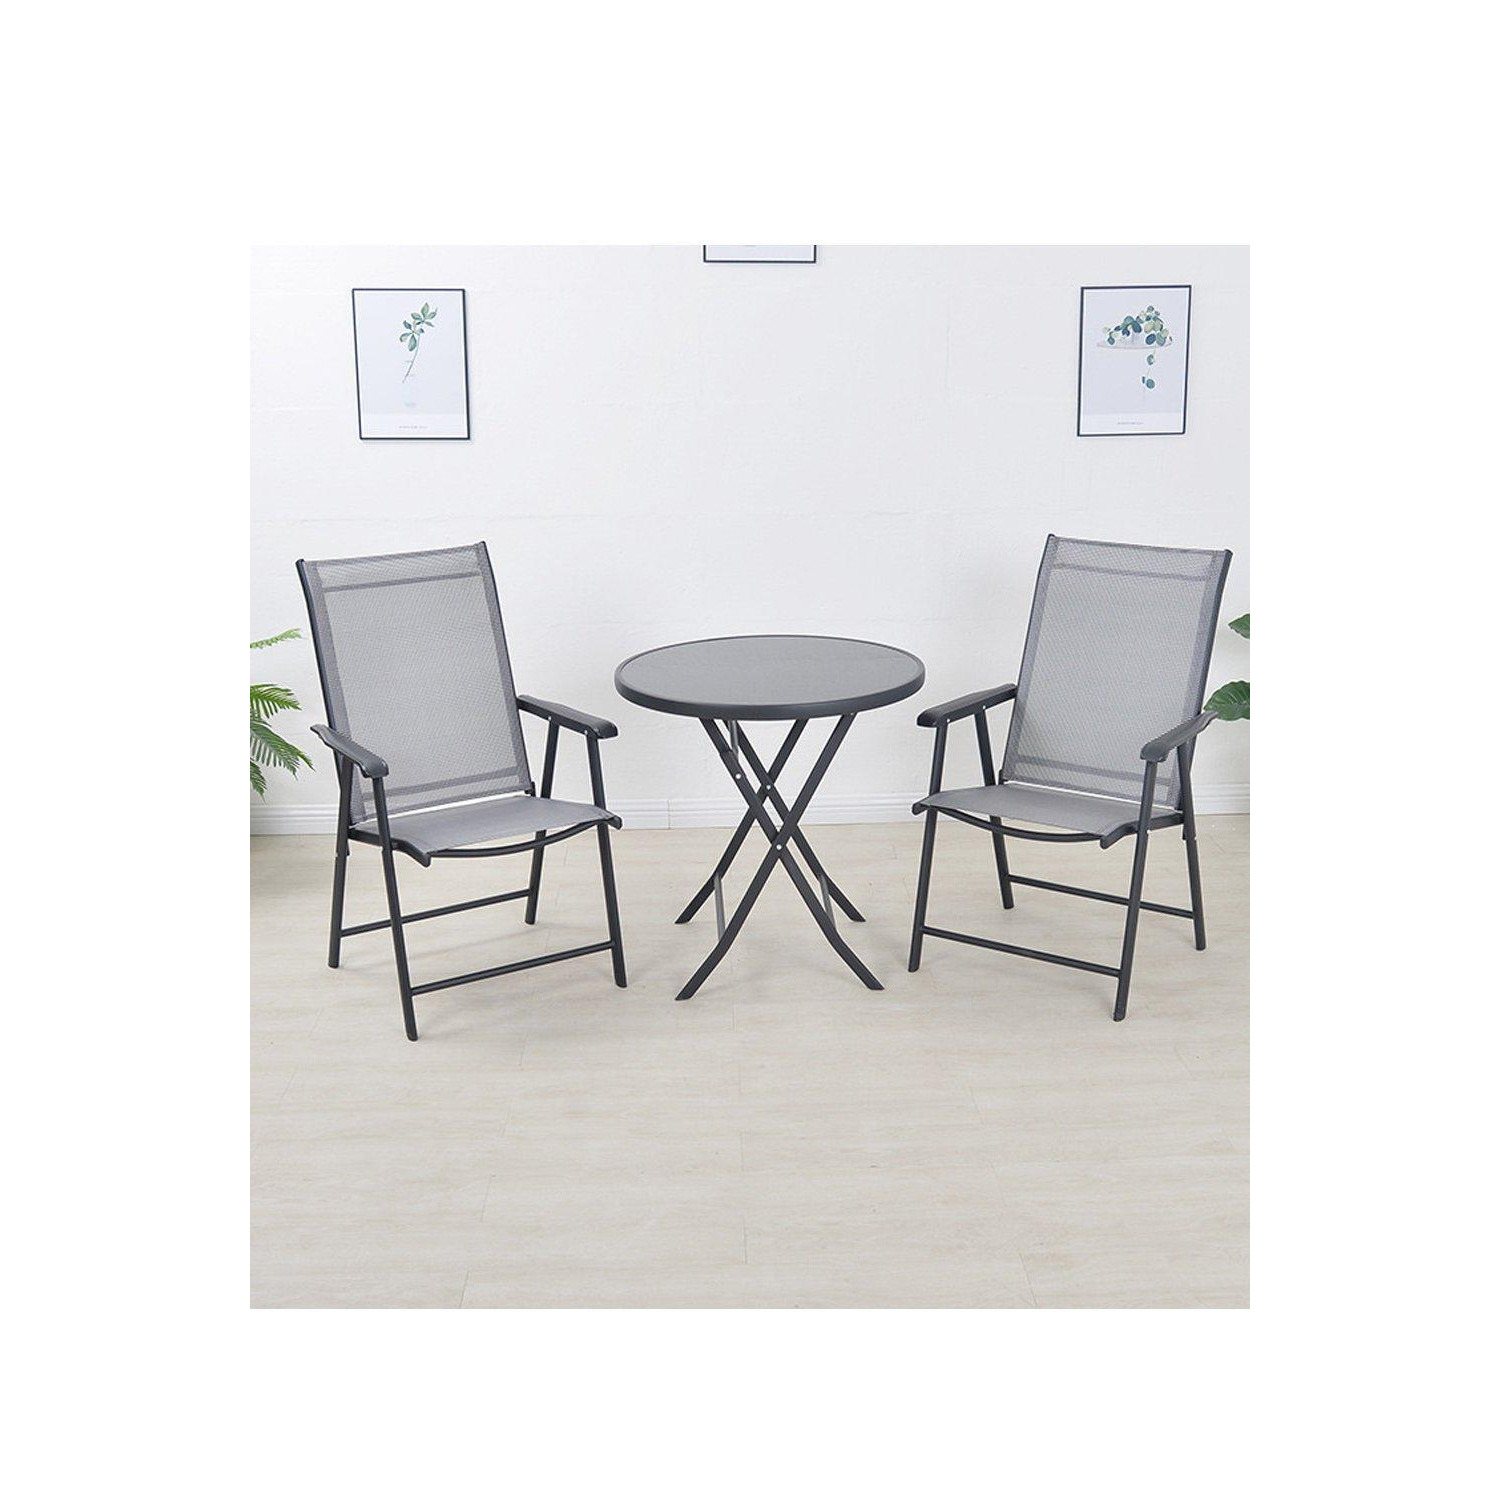 2-Seater Garden Round Dining Bistro Table Set - image 1